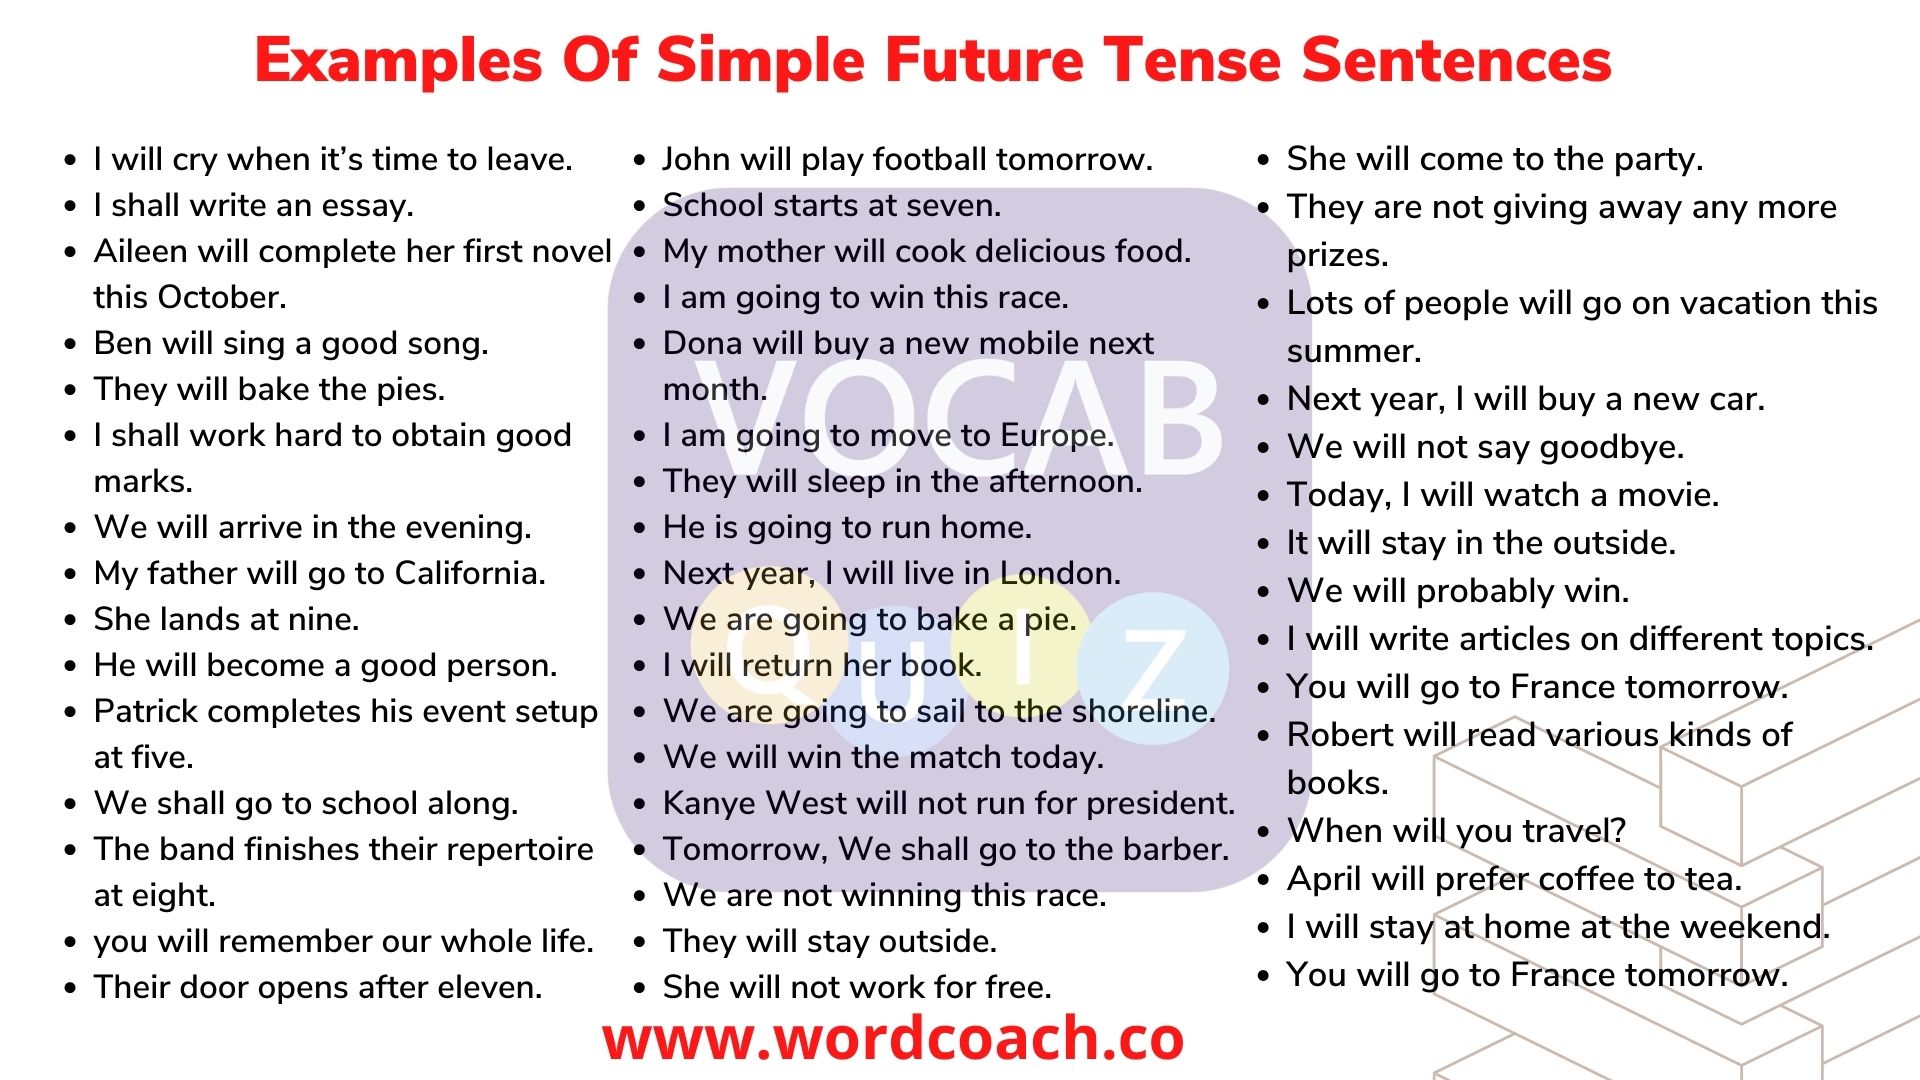 examples-of-simple-future-tense-sentences